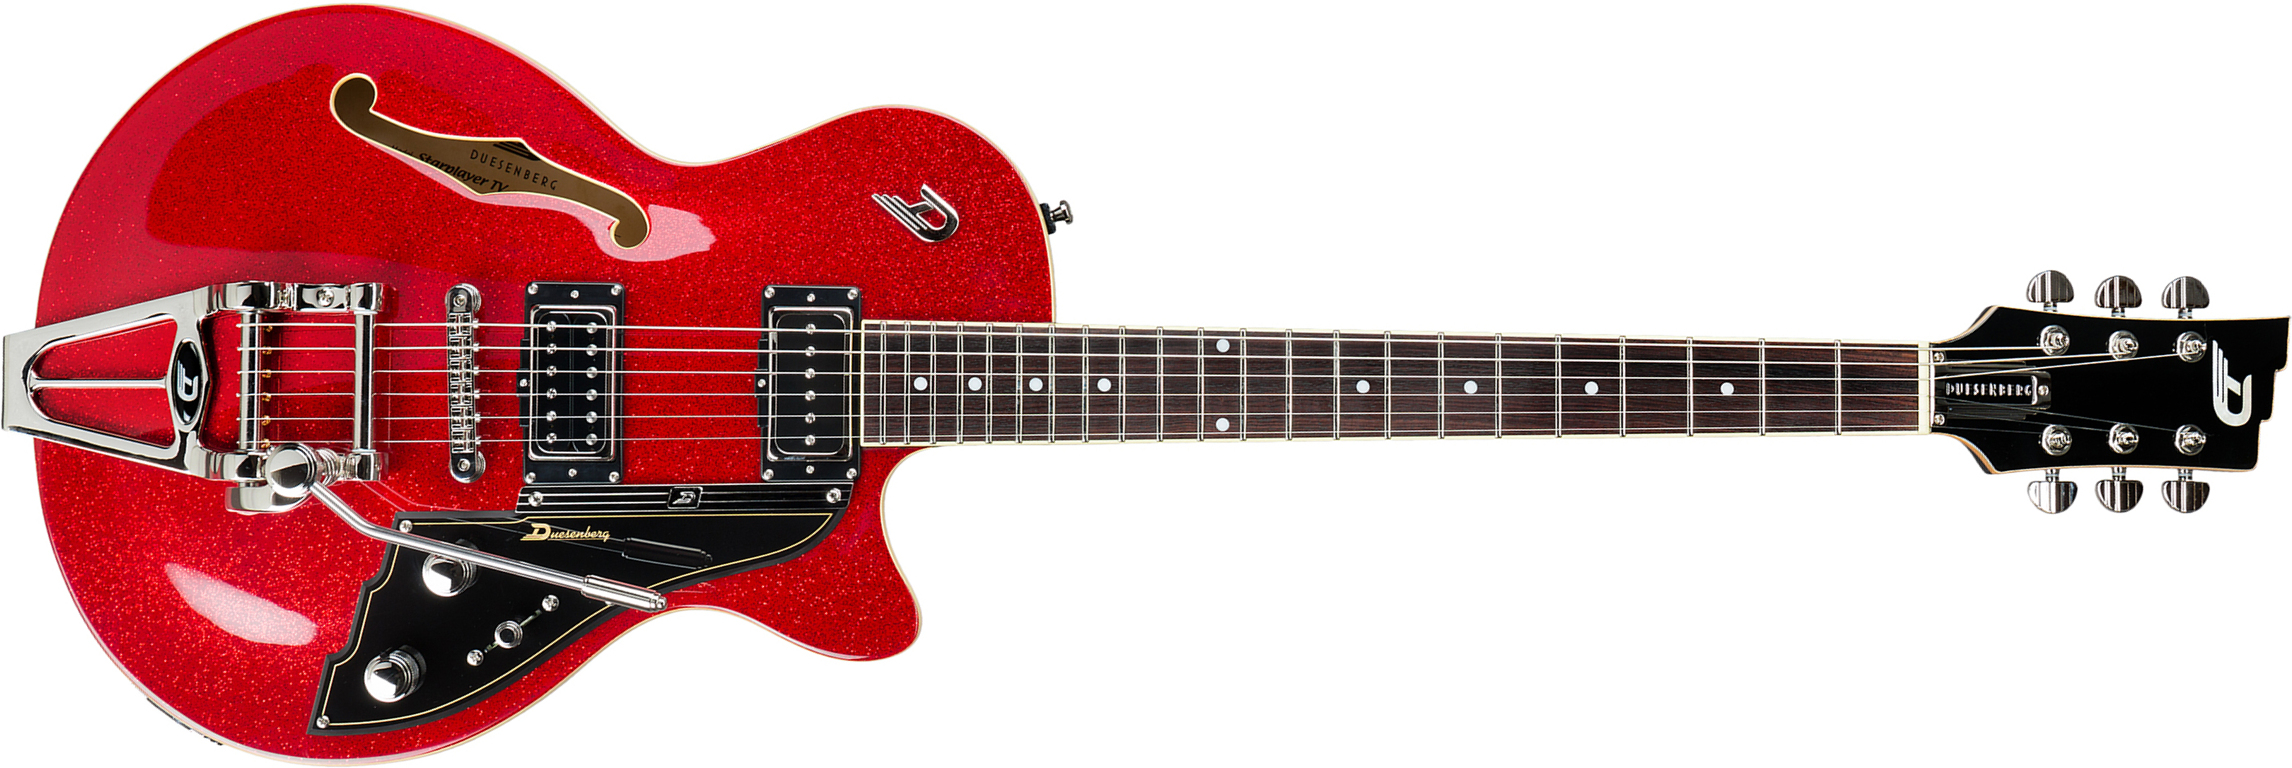 Duesenberg Starplayer Tv Hs Trem Rw - Red Sparkle - Semi hollow elektriche gitaar - Main picture